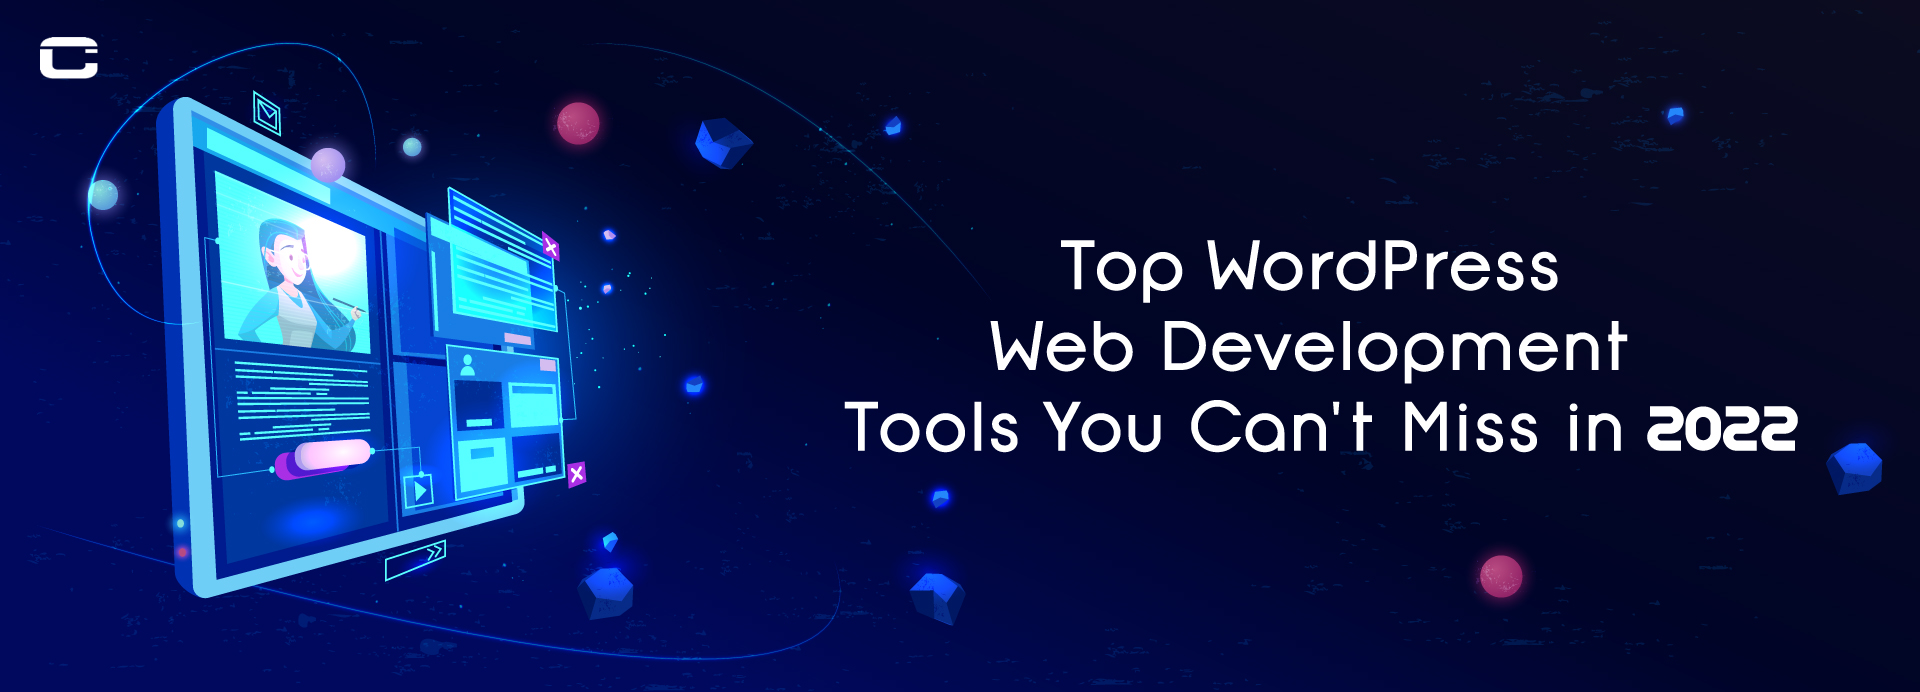 Top WordPress Web Development Tools You Can't Miss in 2022